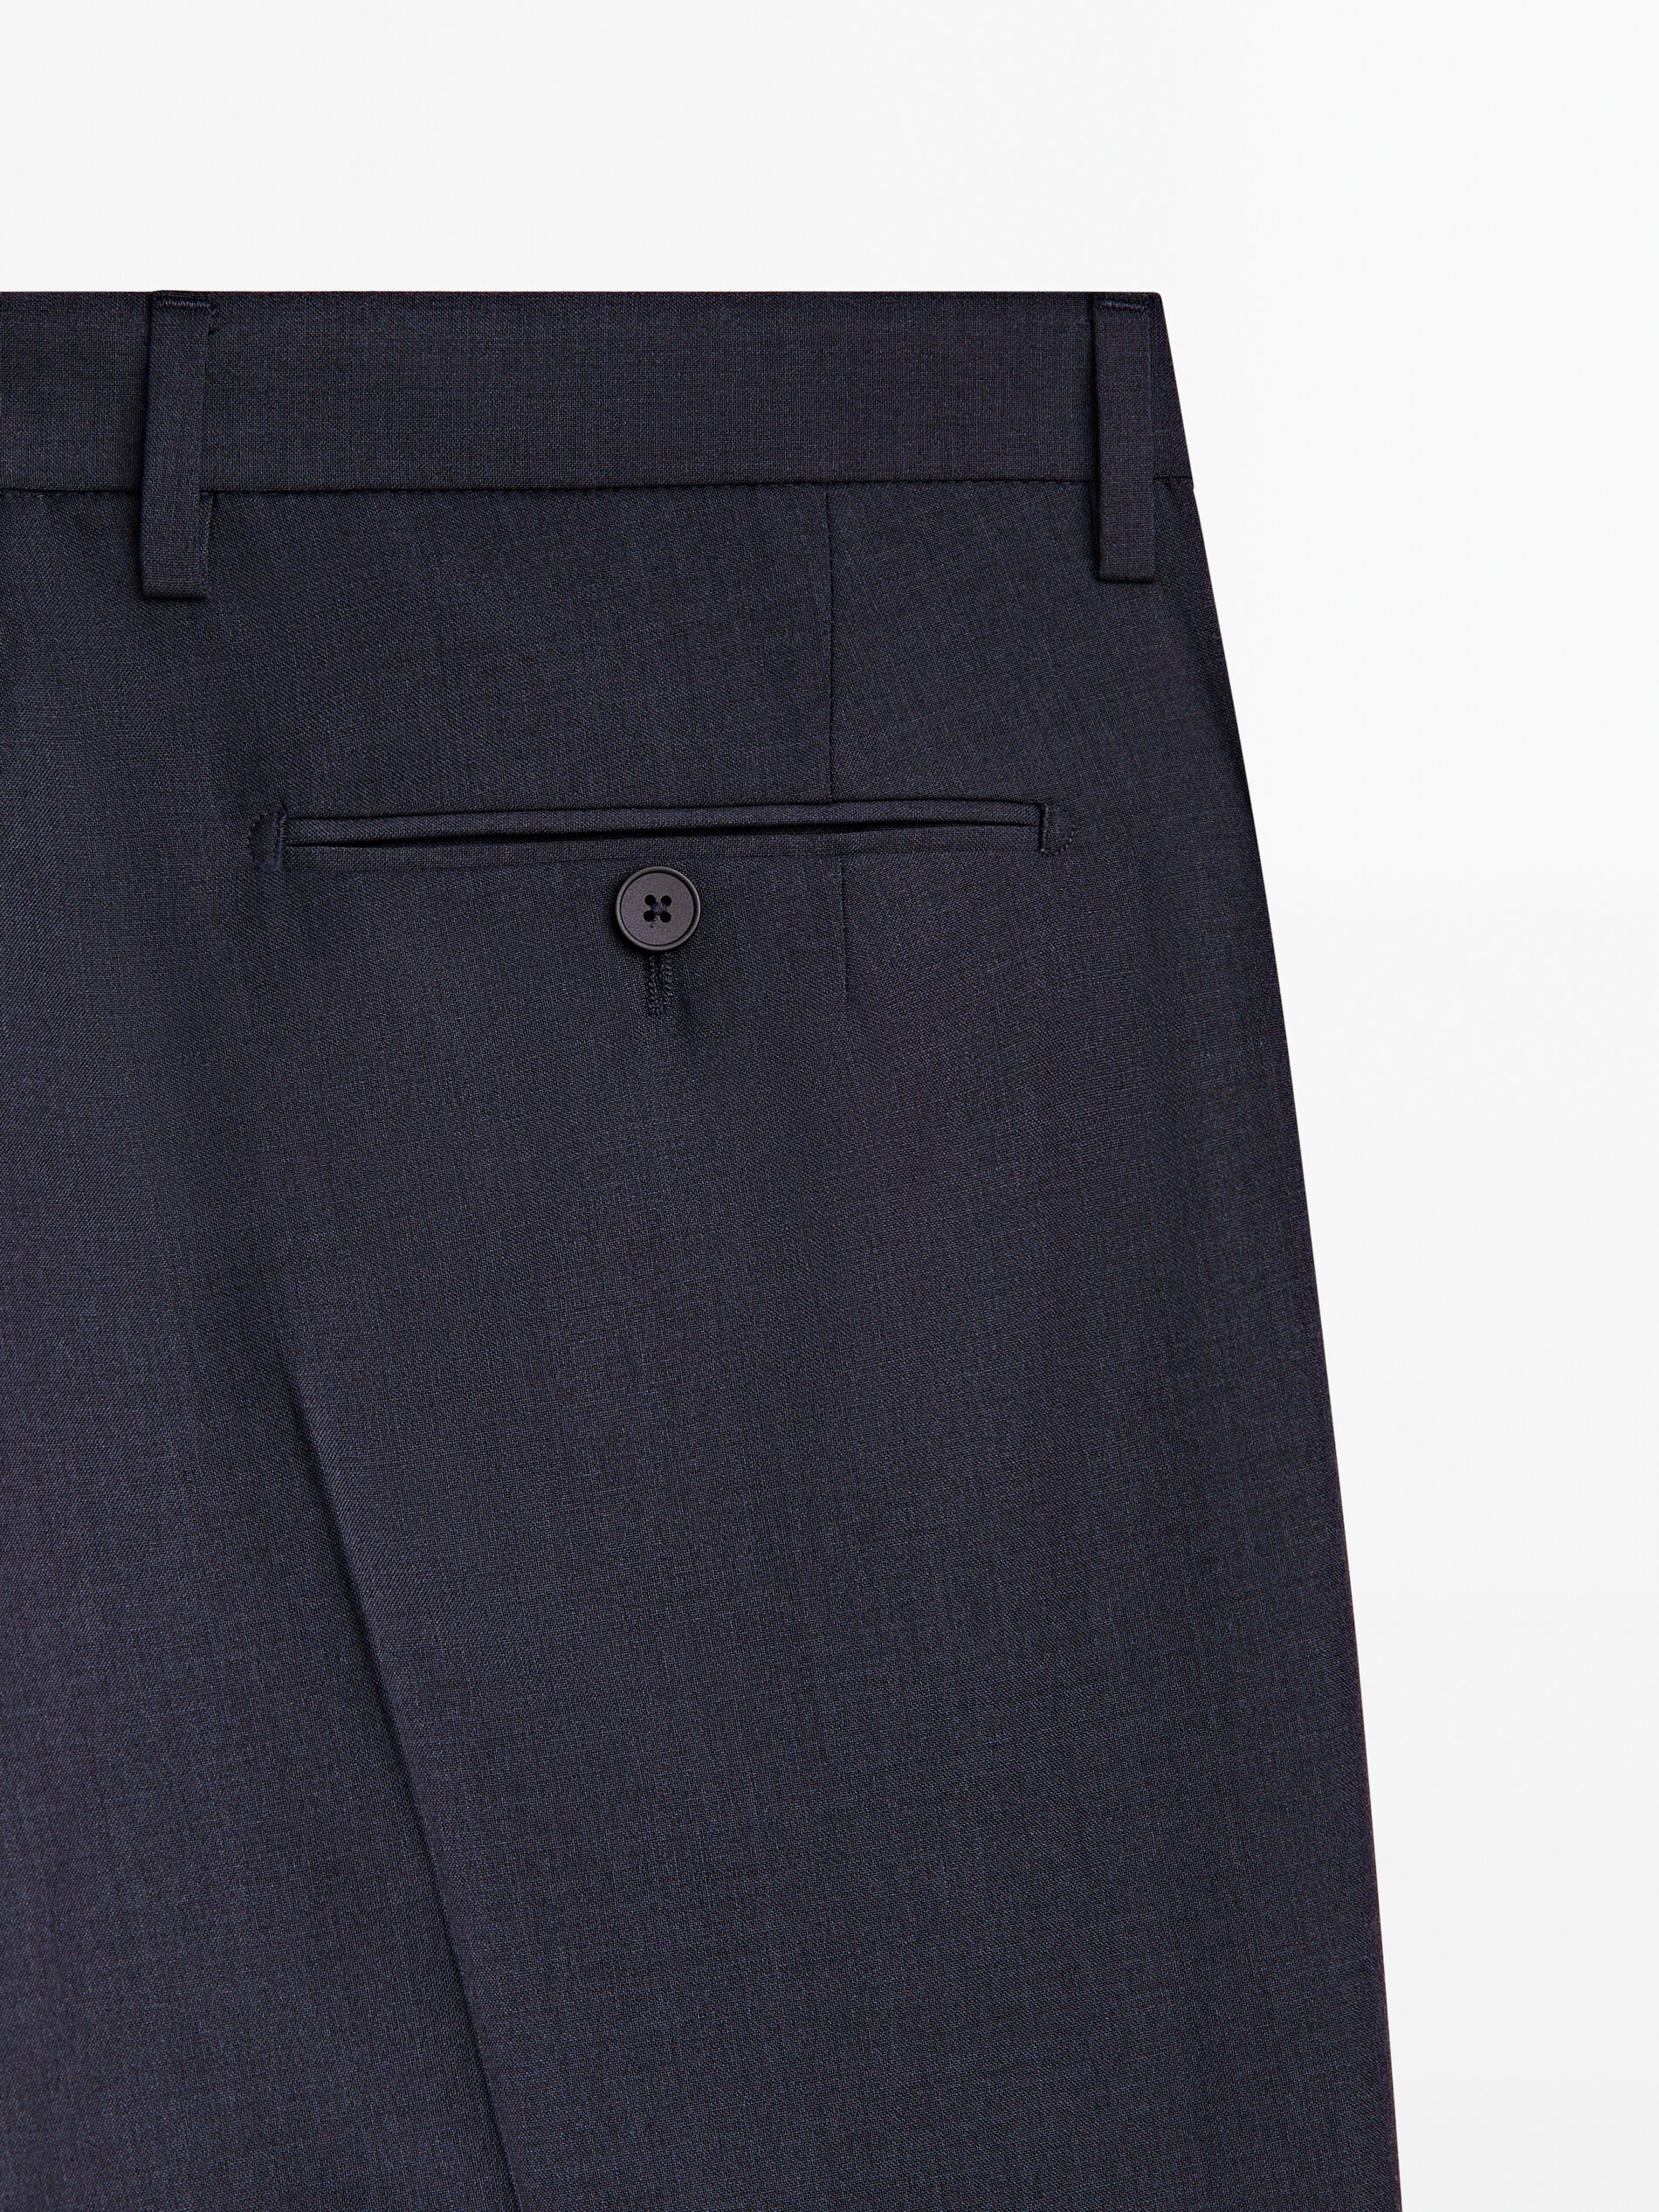 Slim Fit Suit trousers - Dark blue - Men | H&M